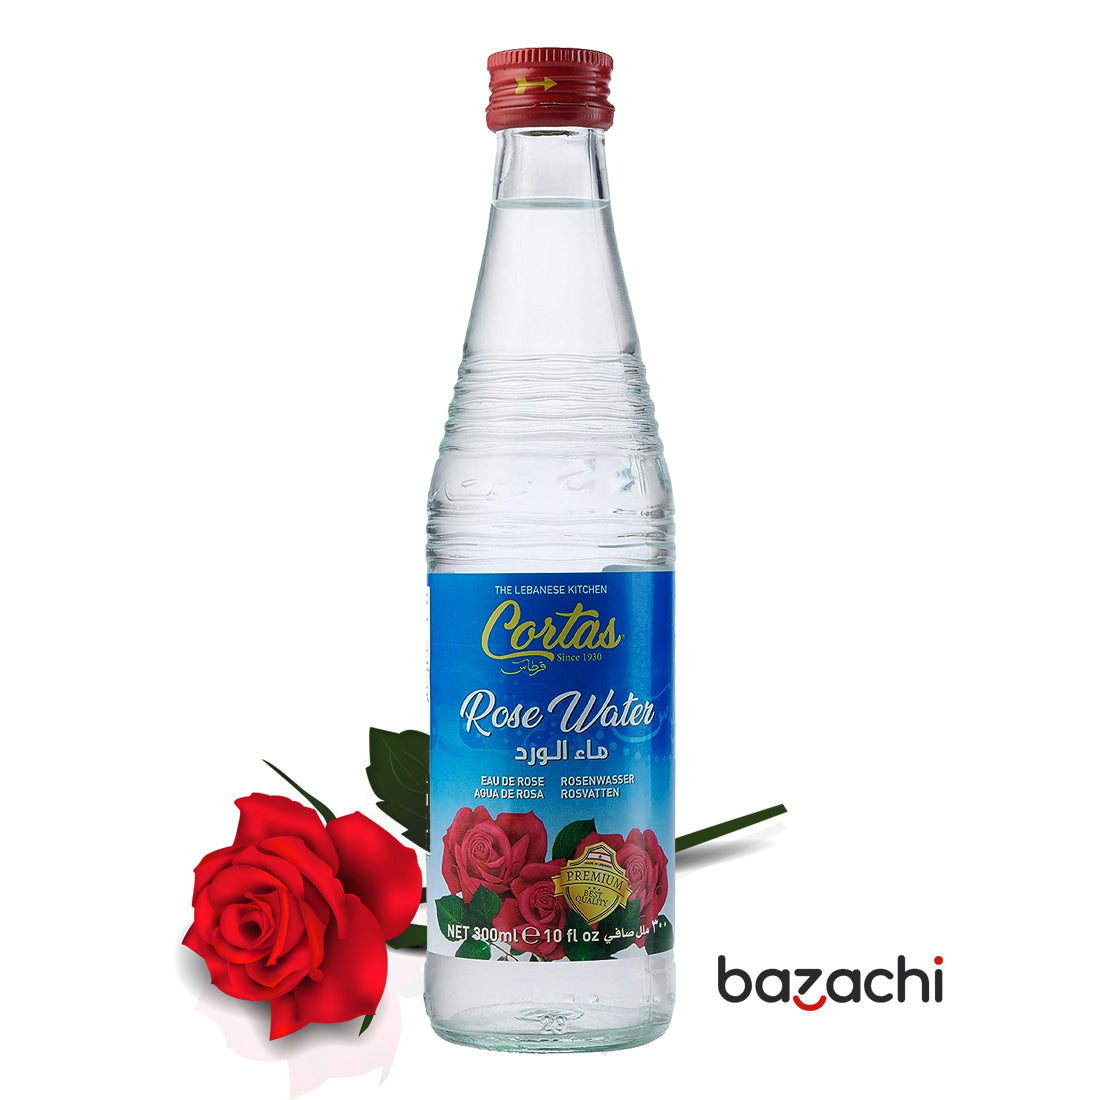 Cortas - Blossom Rose Water - Gluten Free 300ml